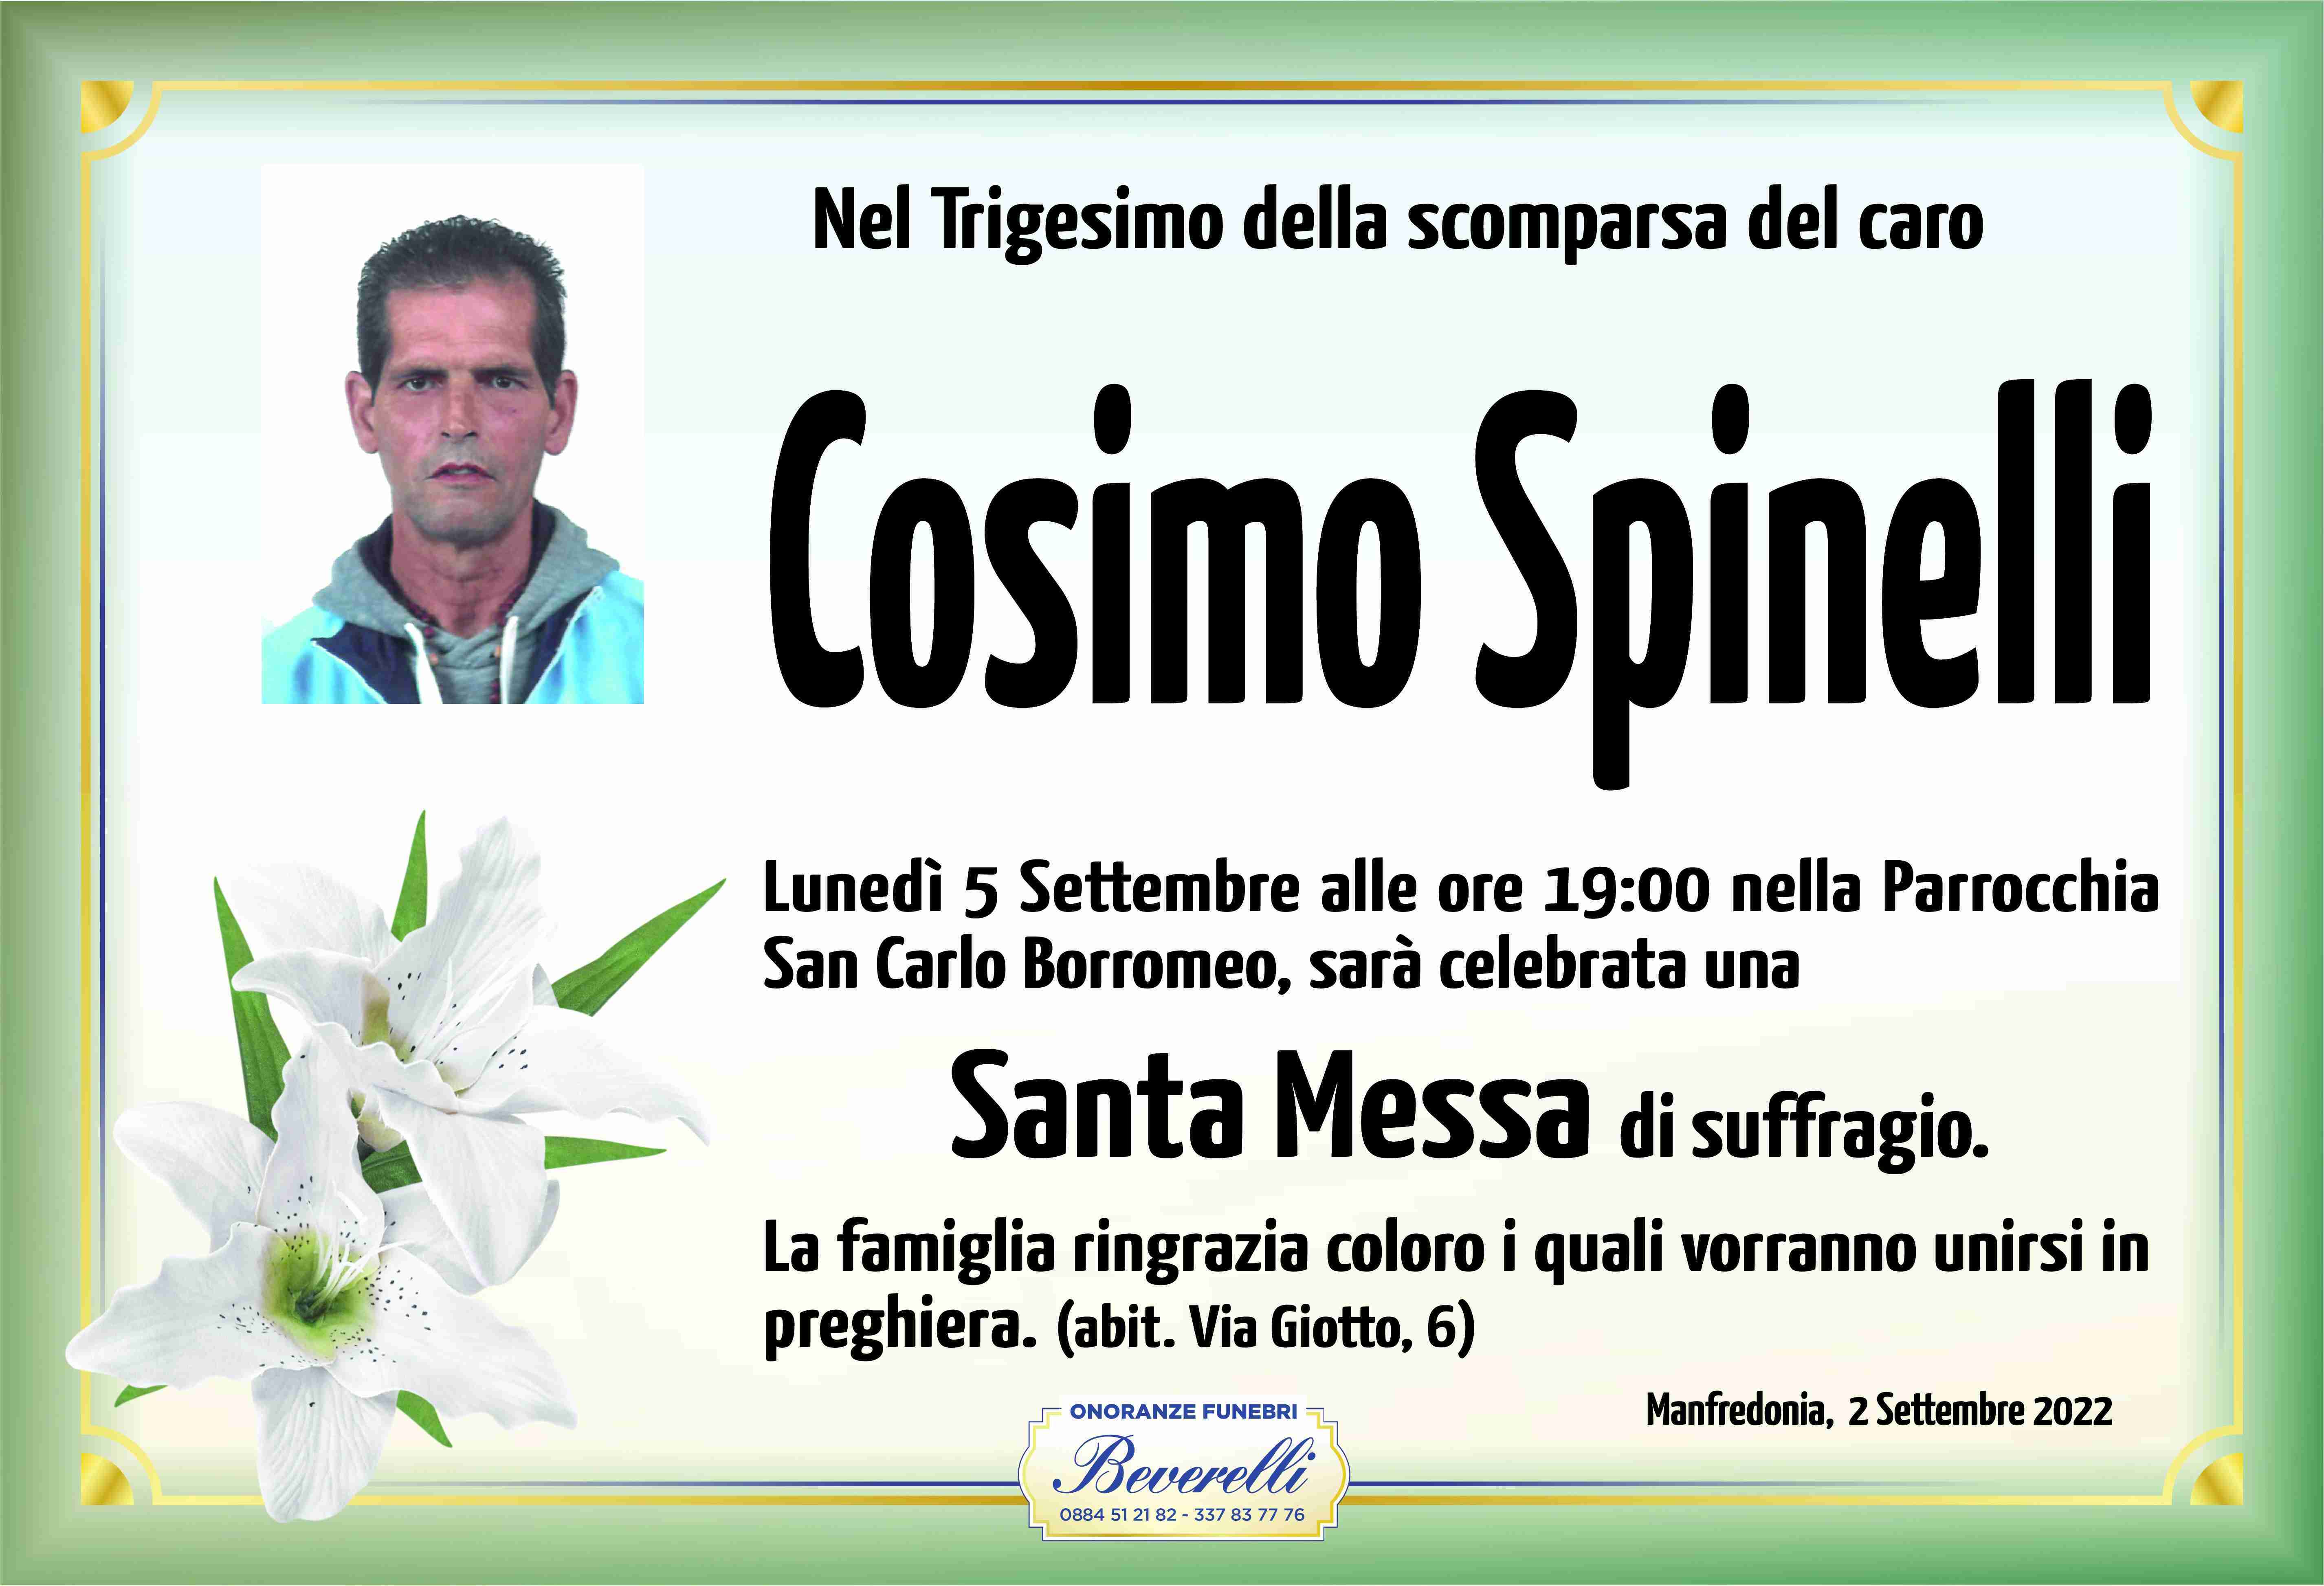 Cosimo Spinelli